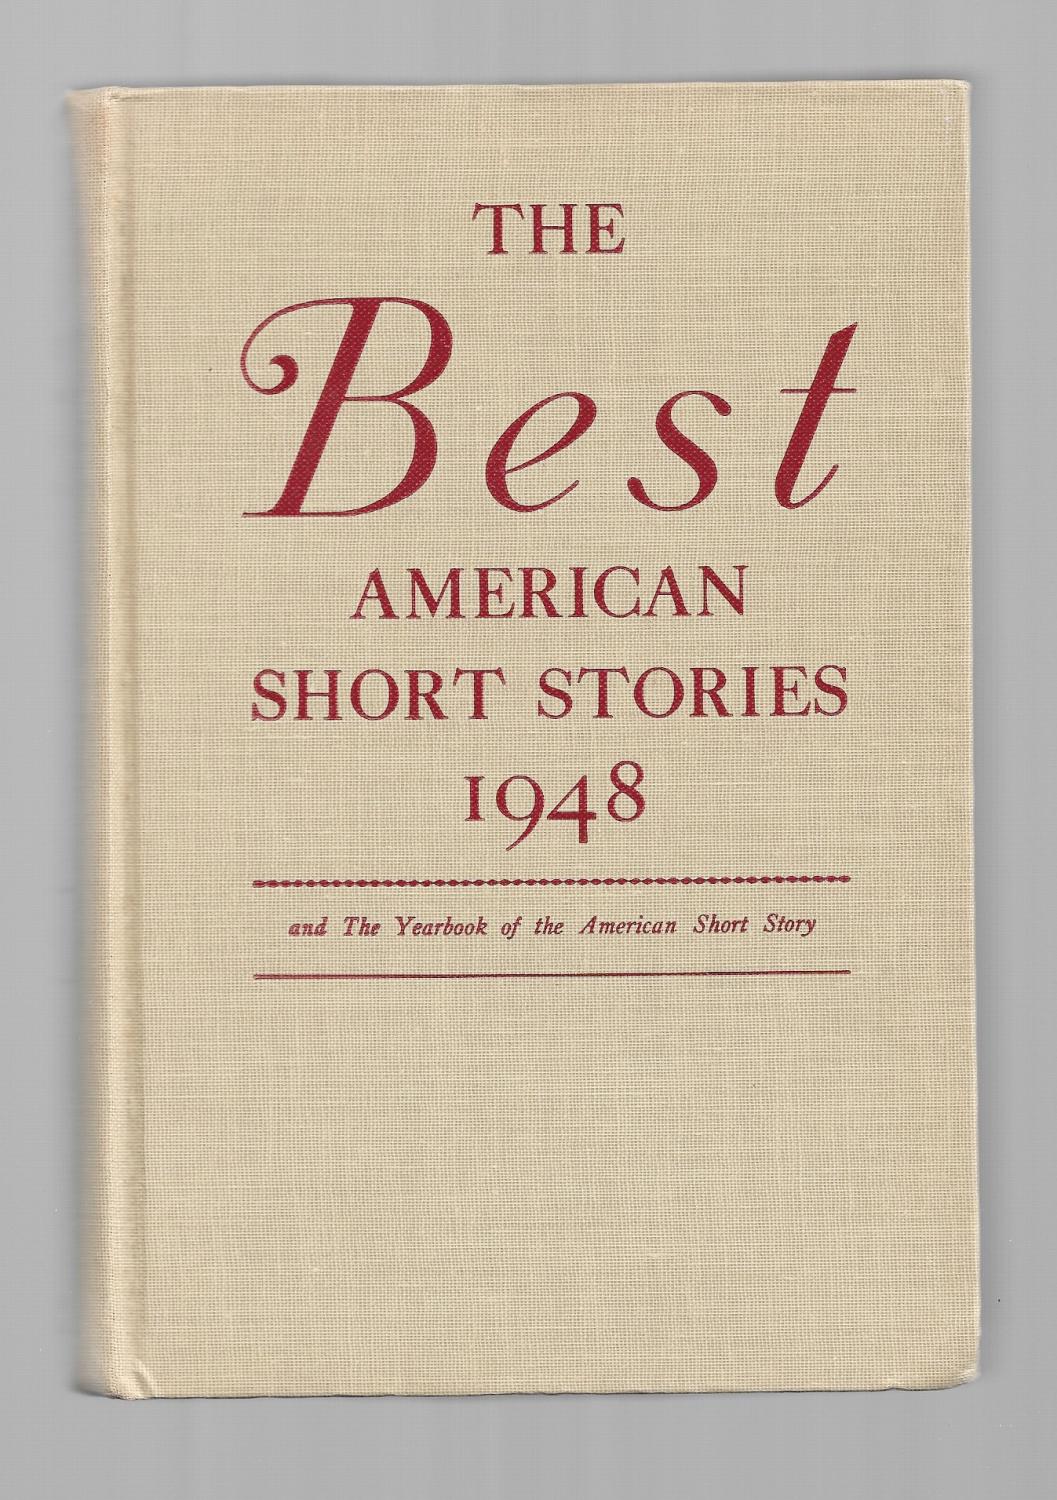 famous short stories 20th century